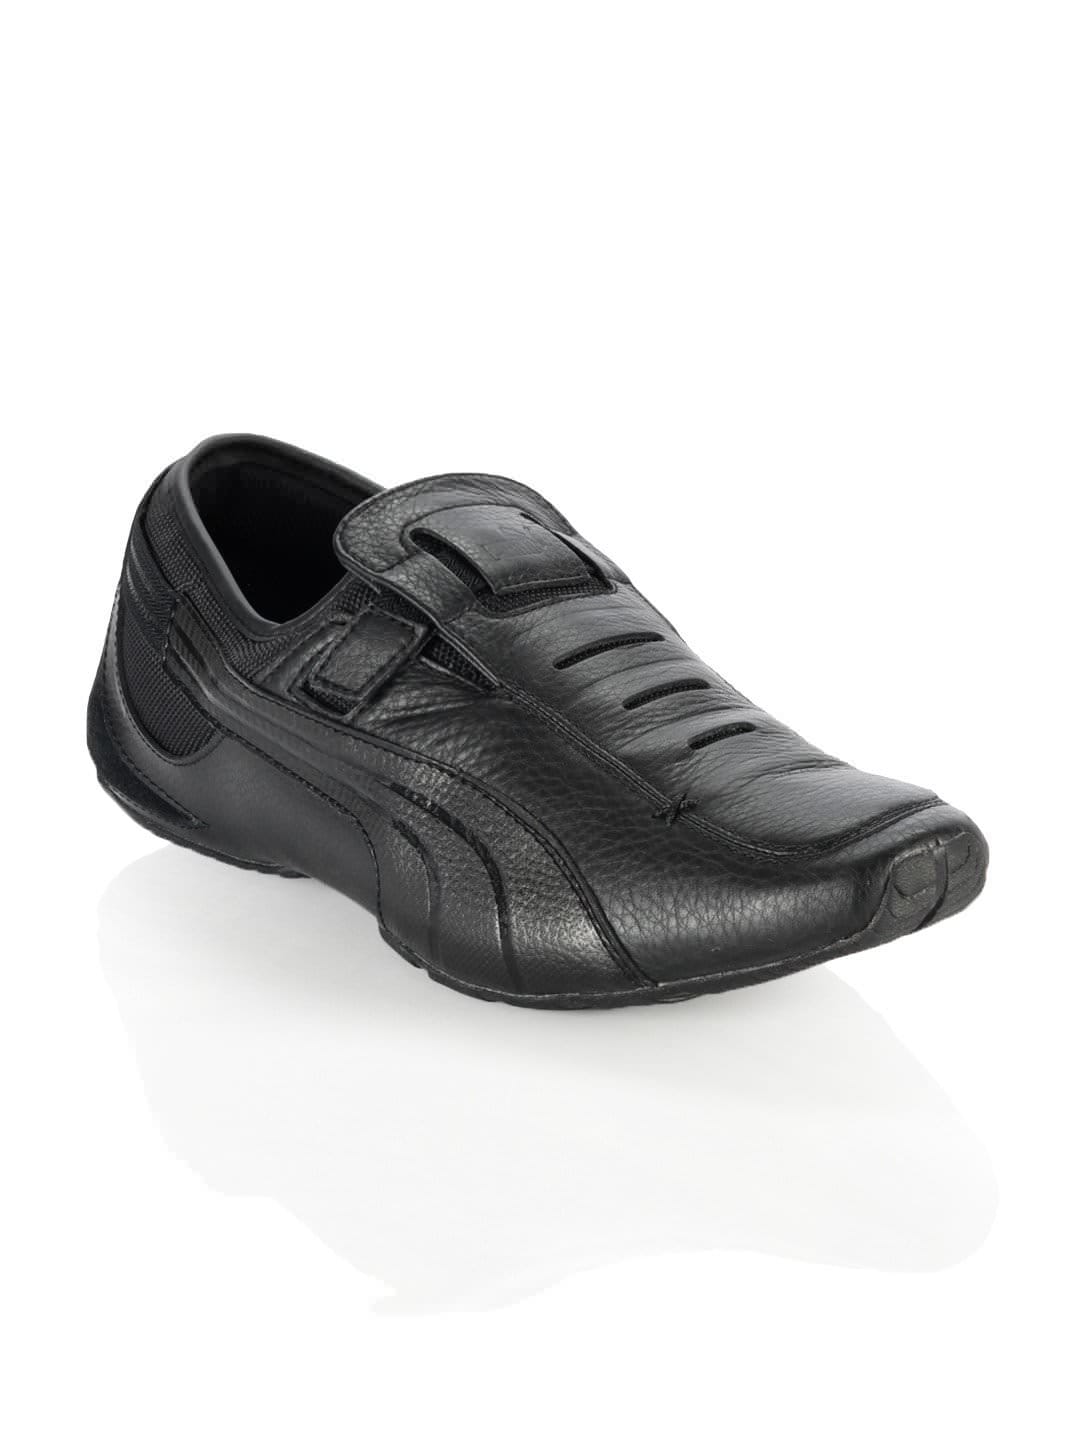 Puma Men Vedano Black Shoes